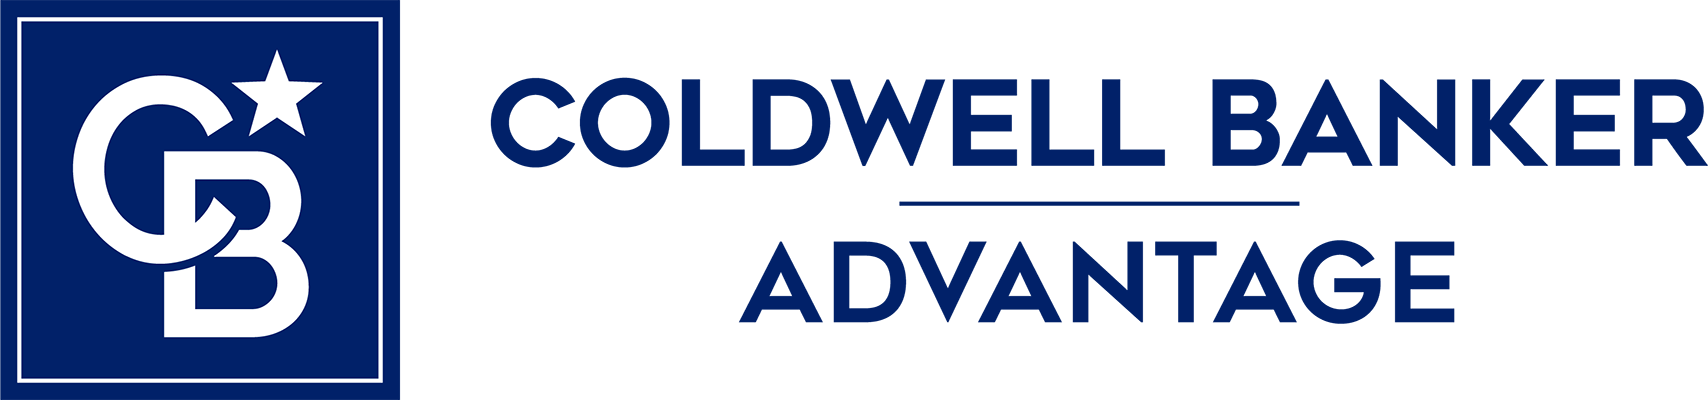 Doss Madden - Coldwell Banker Advantage Logo